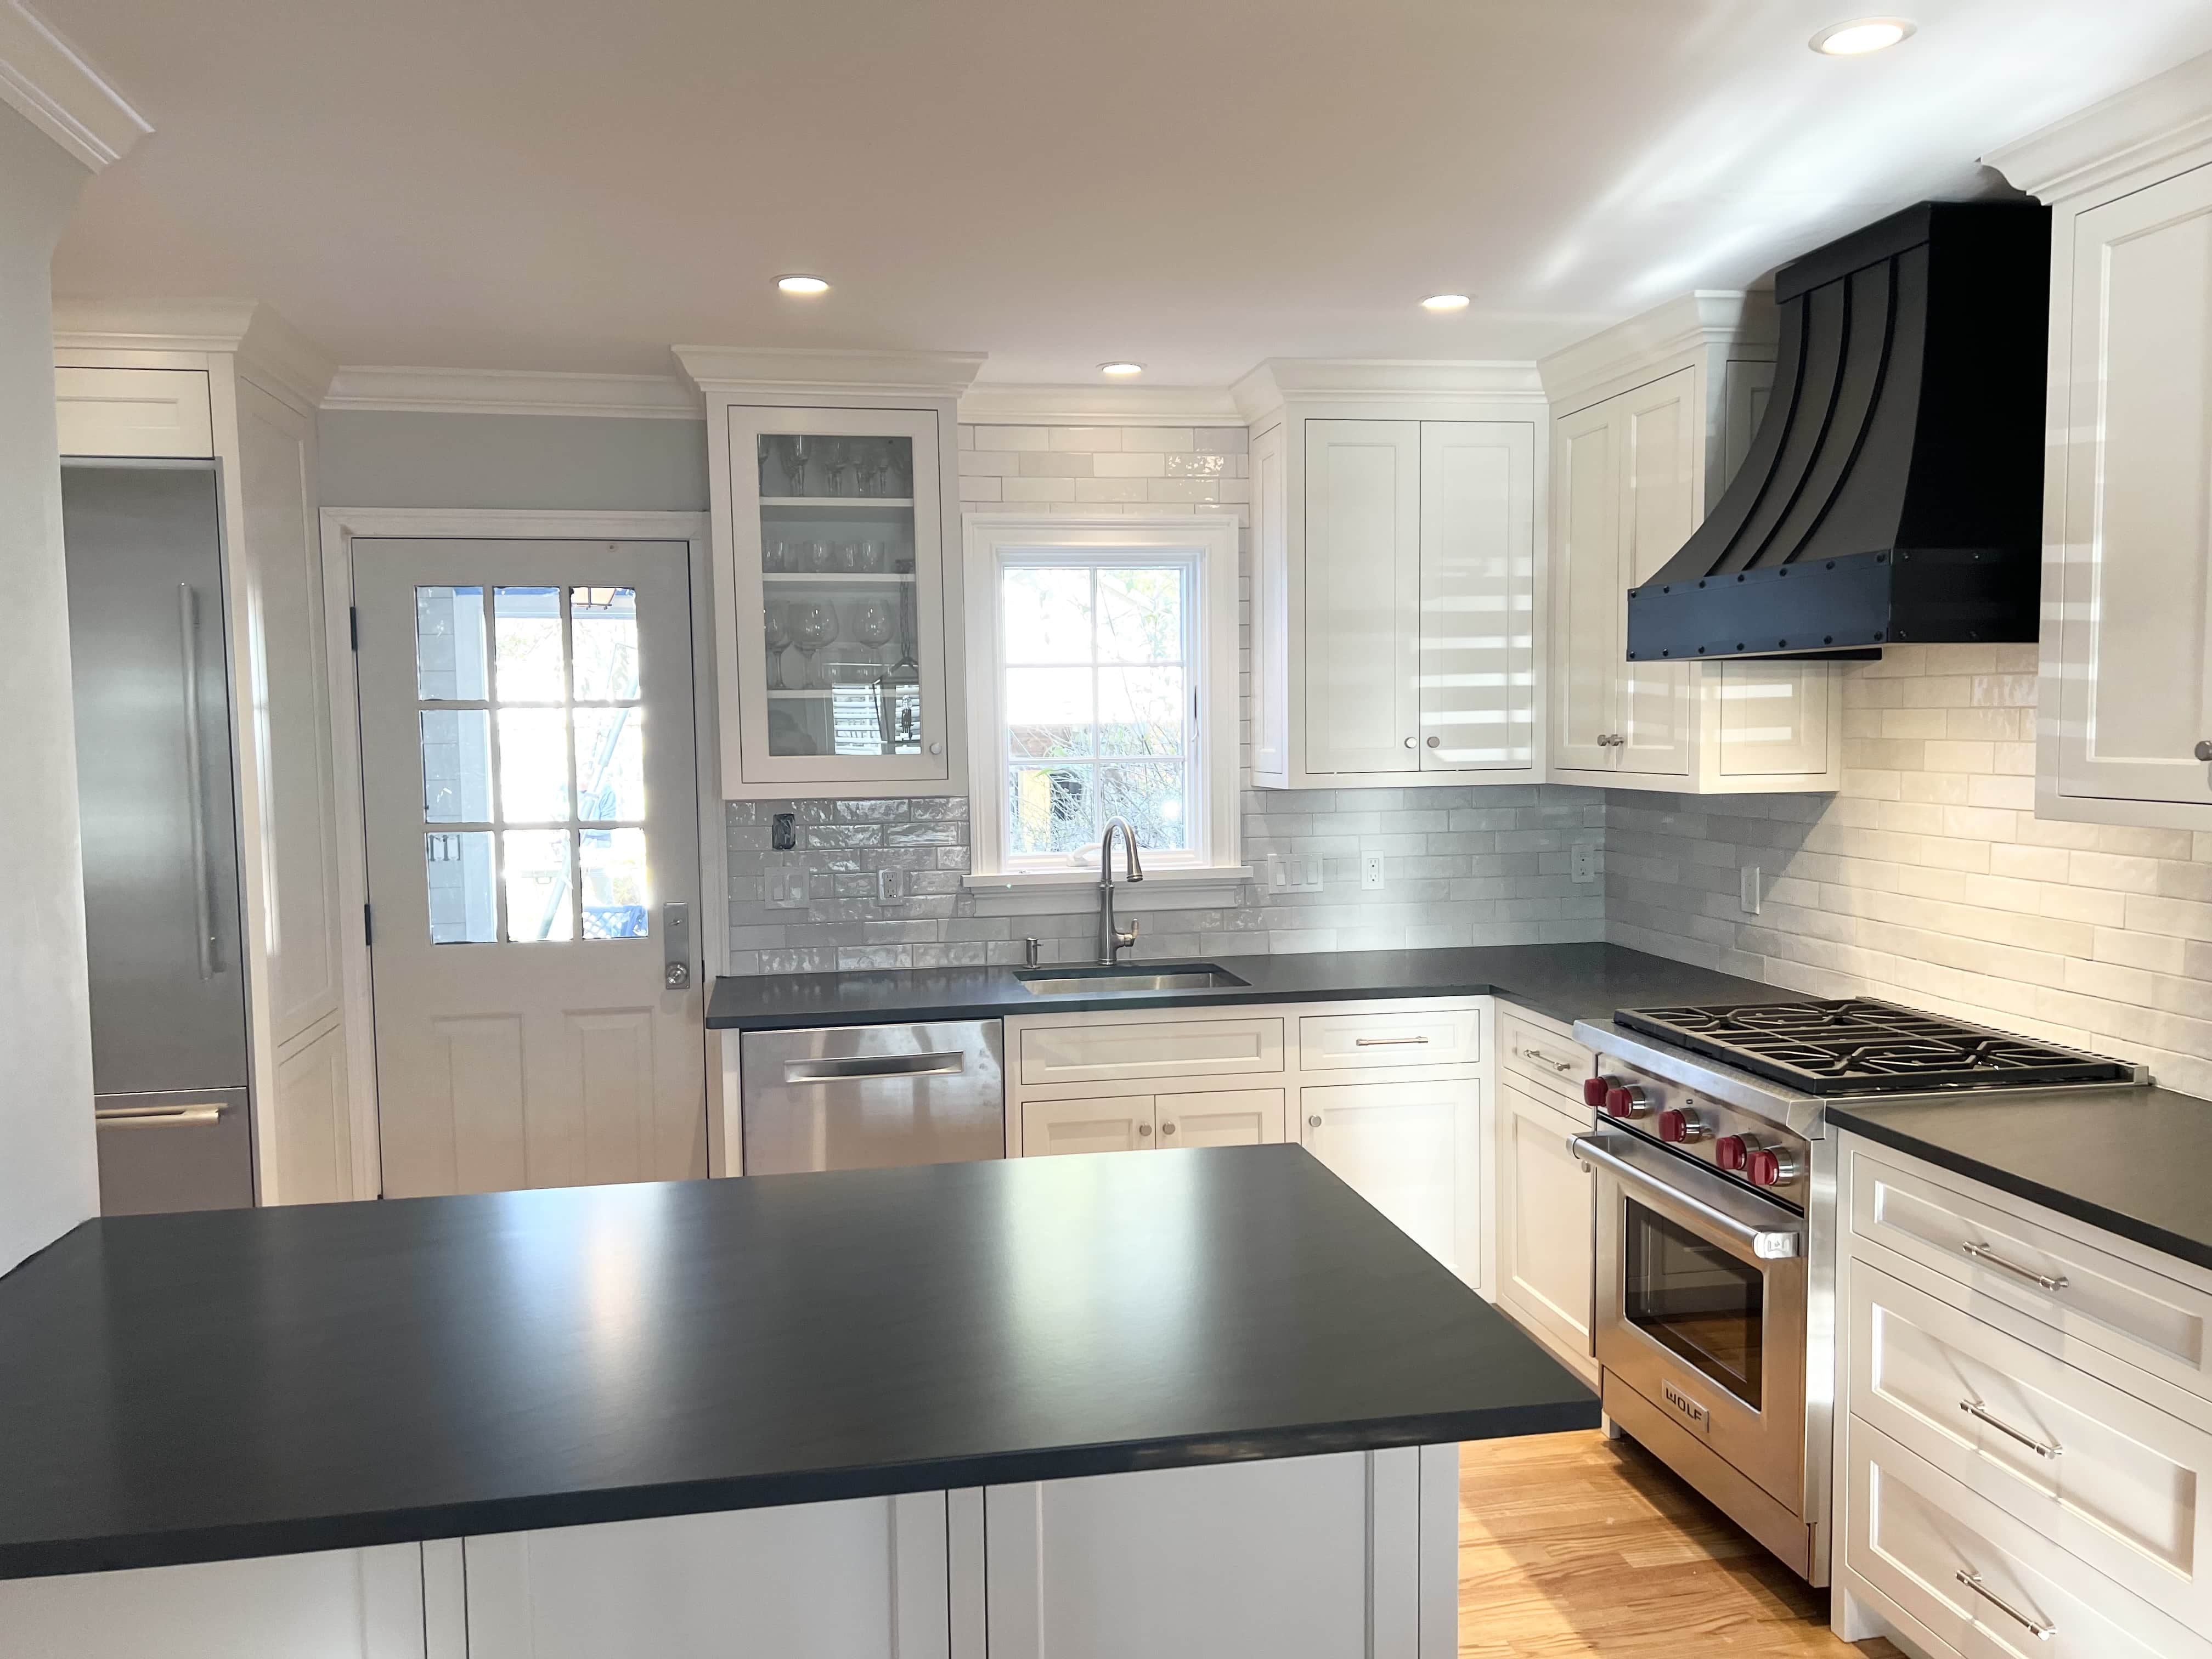 Chic french kitchen design ,sleek white cabinets, black countertops, captivating brick backsplash crowned by range hood